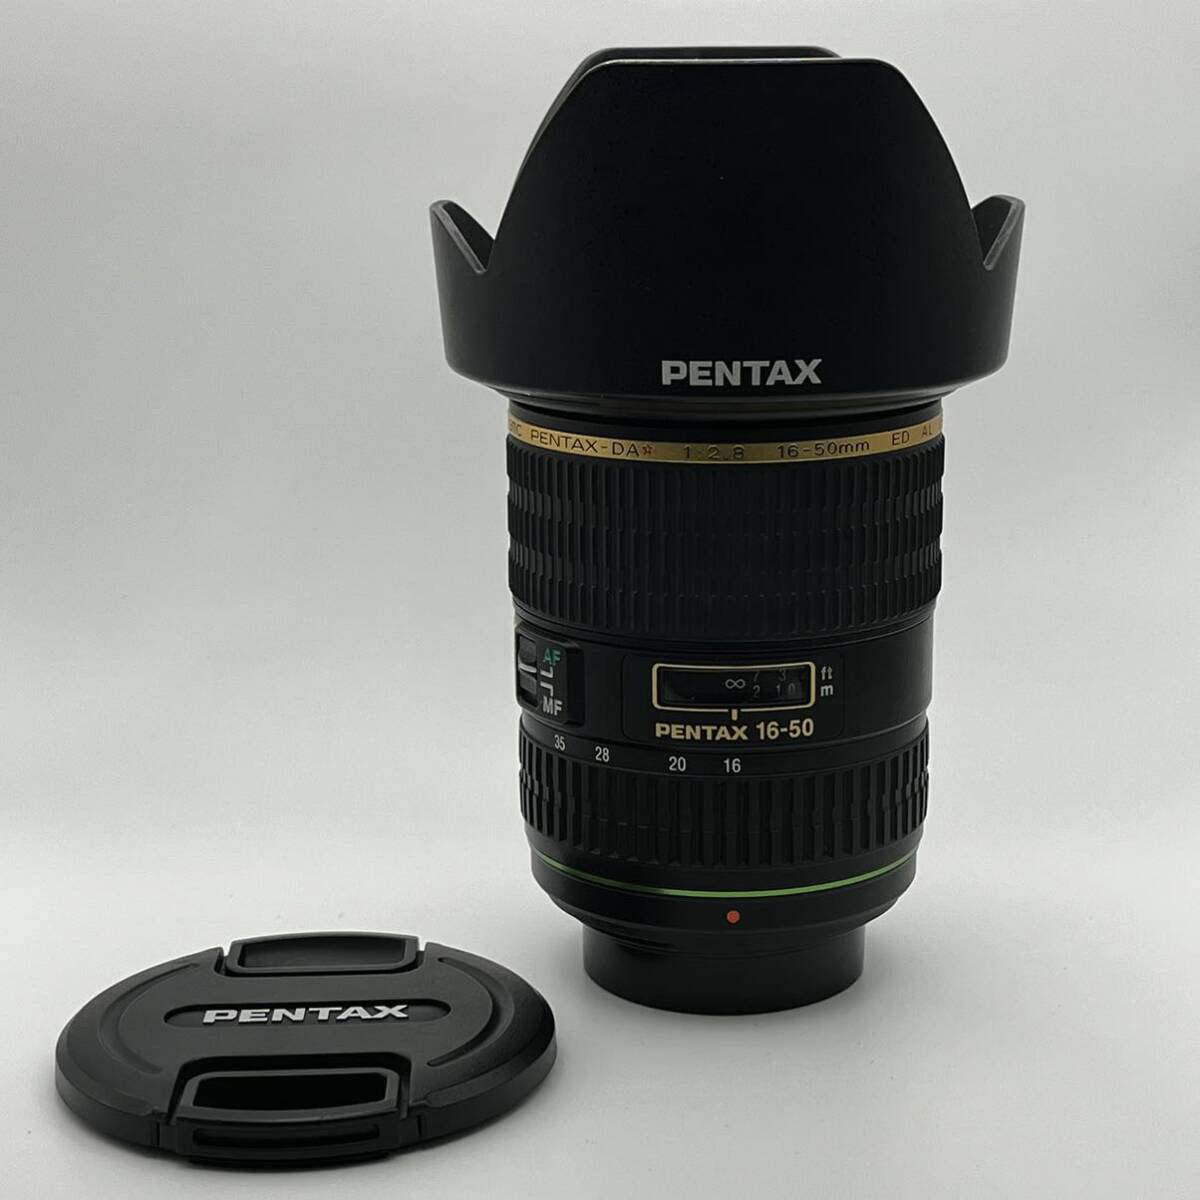 smc PENTAX-DA* 16-50mm F2.8 ED AL[IF] SDM smc Pentax DA Star K mount large diameter standard zoom lens 